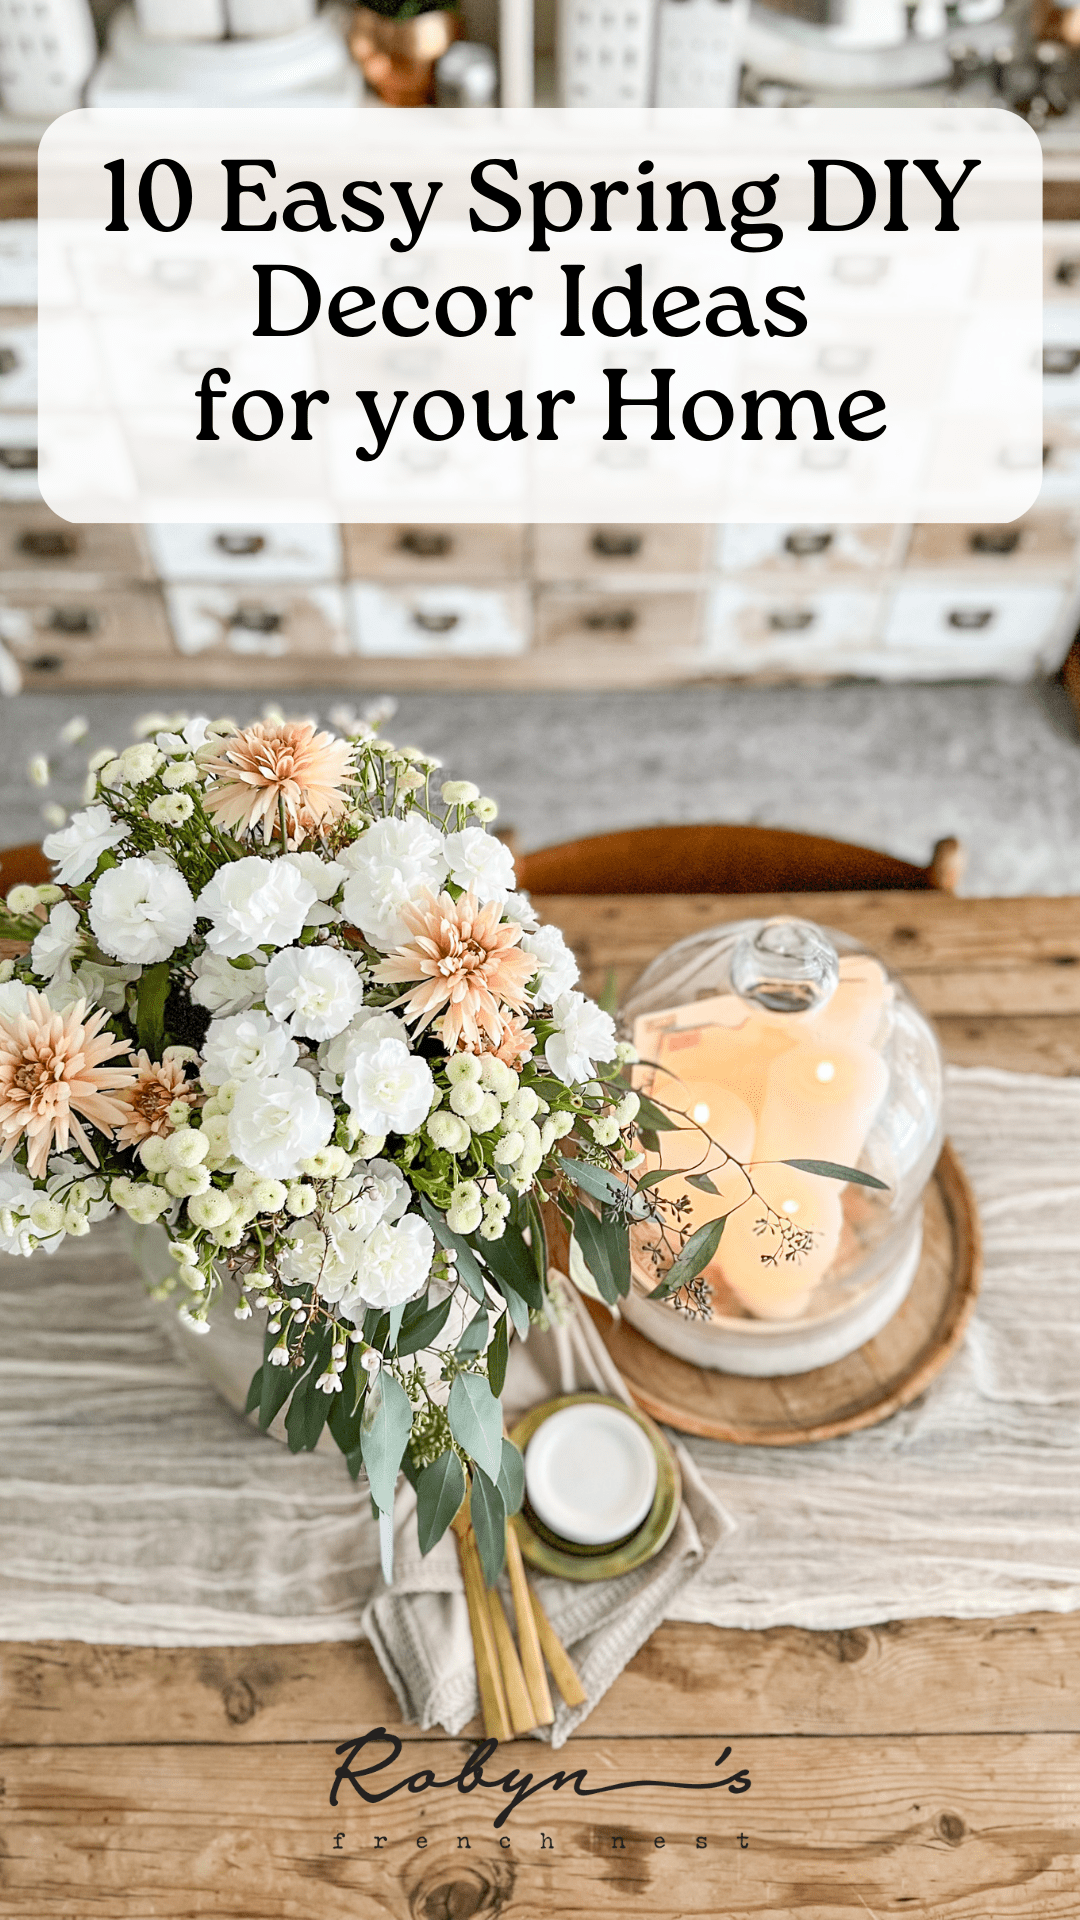 10 Easy Spring DIY Decor Ideas for Your Home